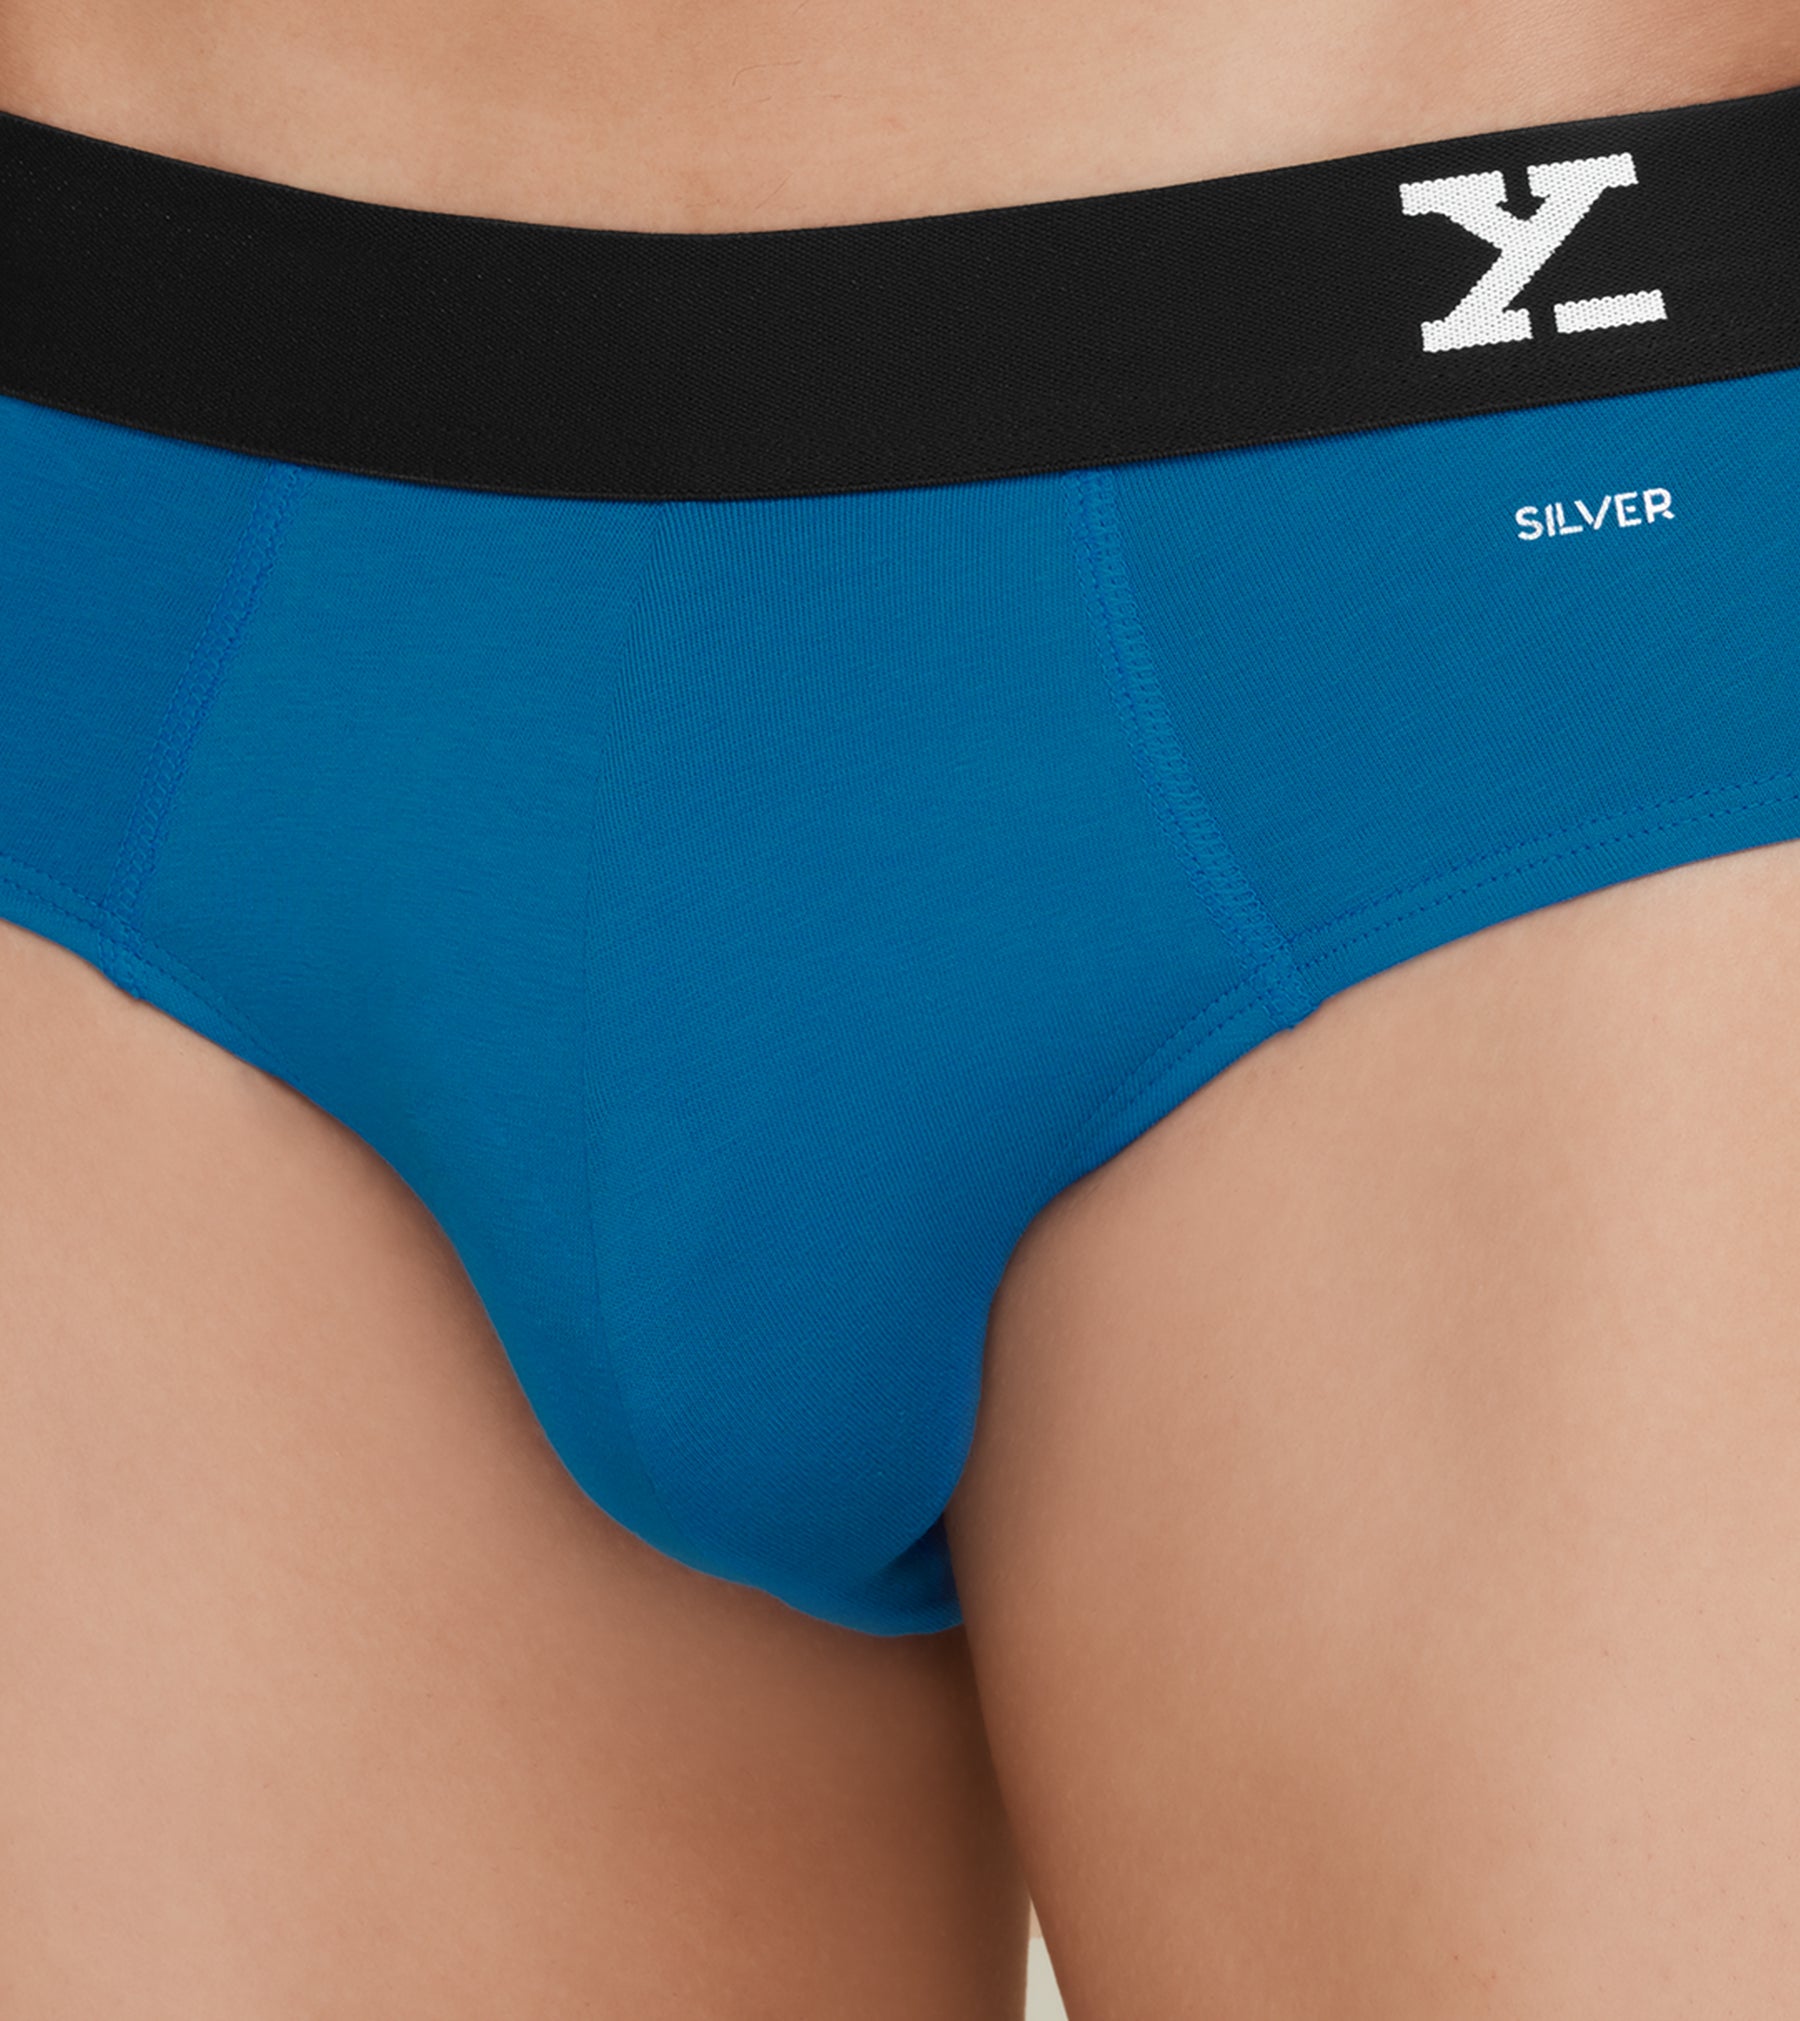 Aero Silver Cotton Briefs For Men Pack of 3(Maroon, Aqua Blue, Light Blue) -  XYXX Mens Apparels